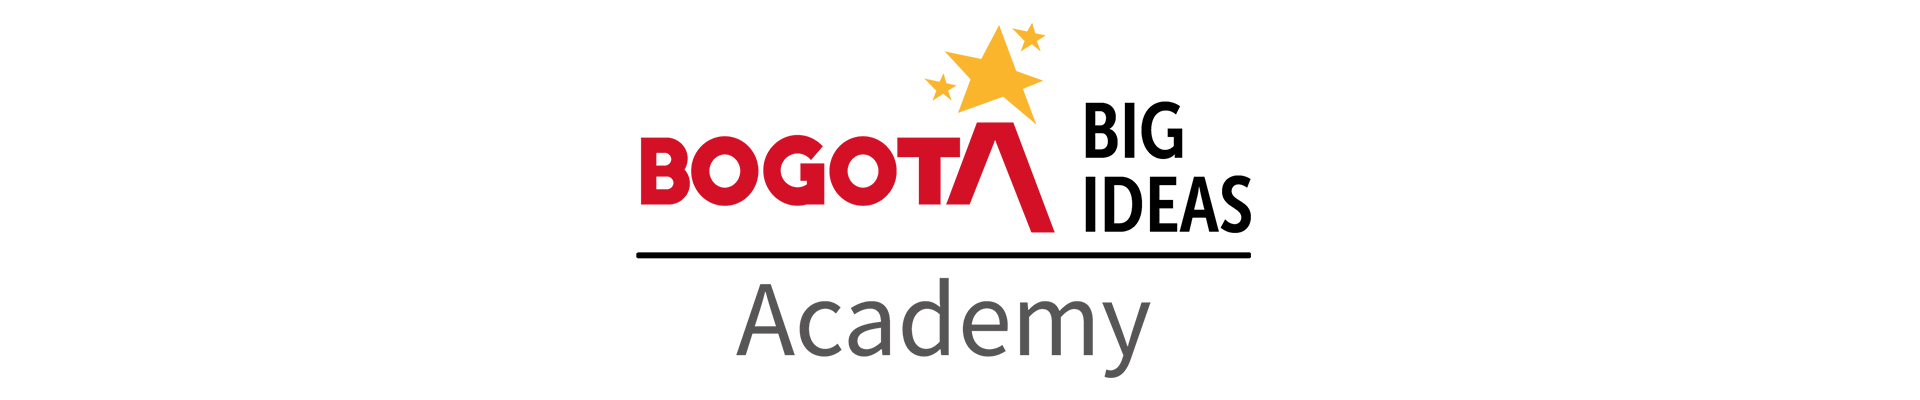 Bogota Big Ideas Academy 2021